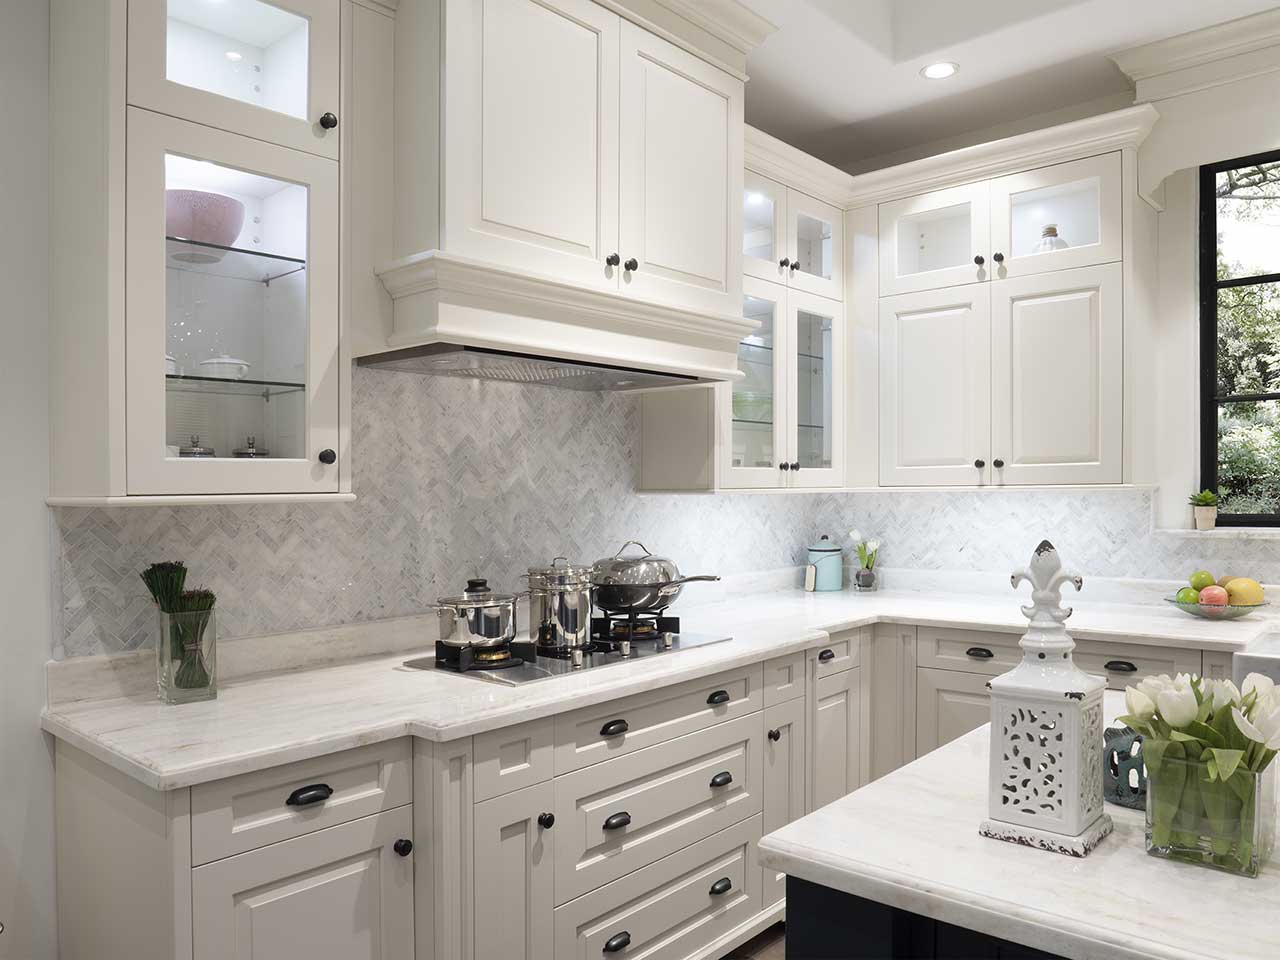 White kitchen with patterned backsplash